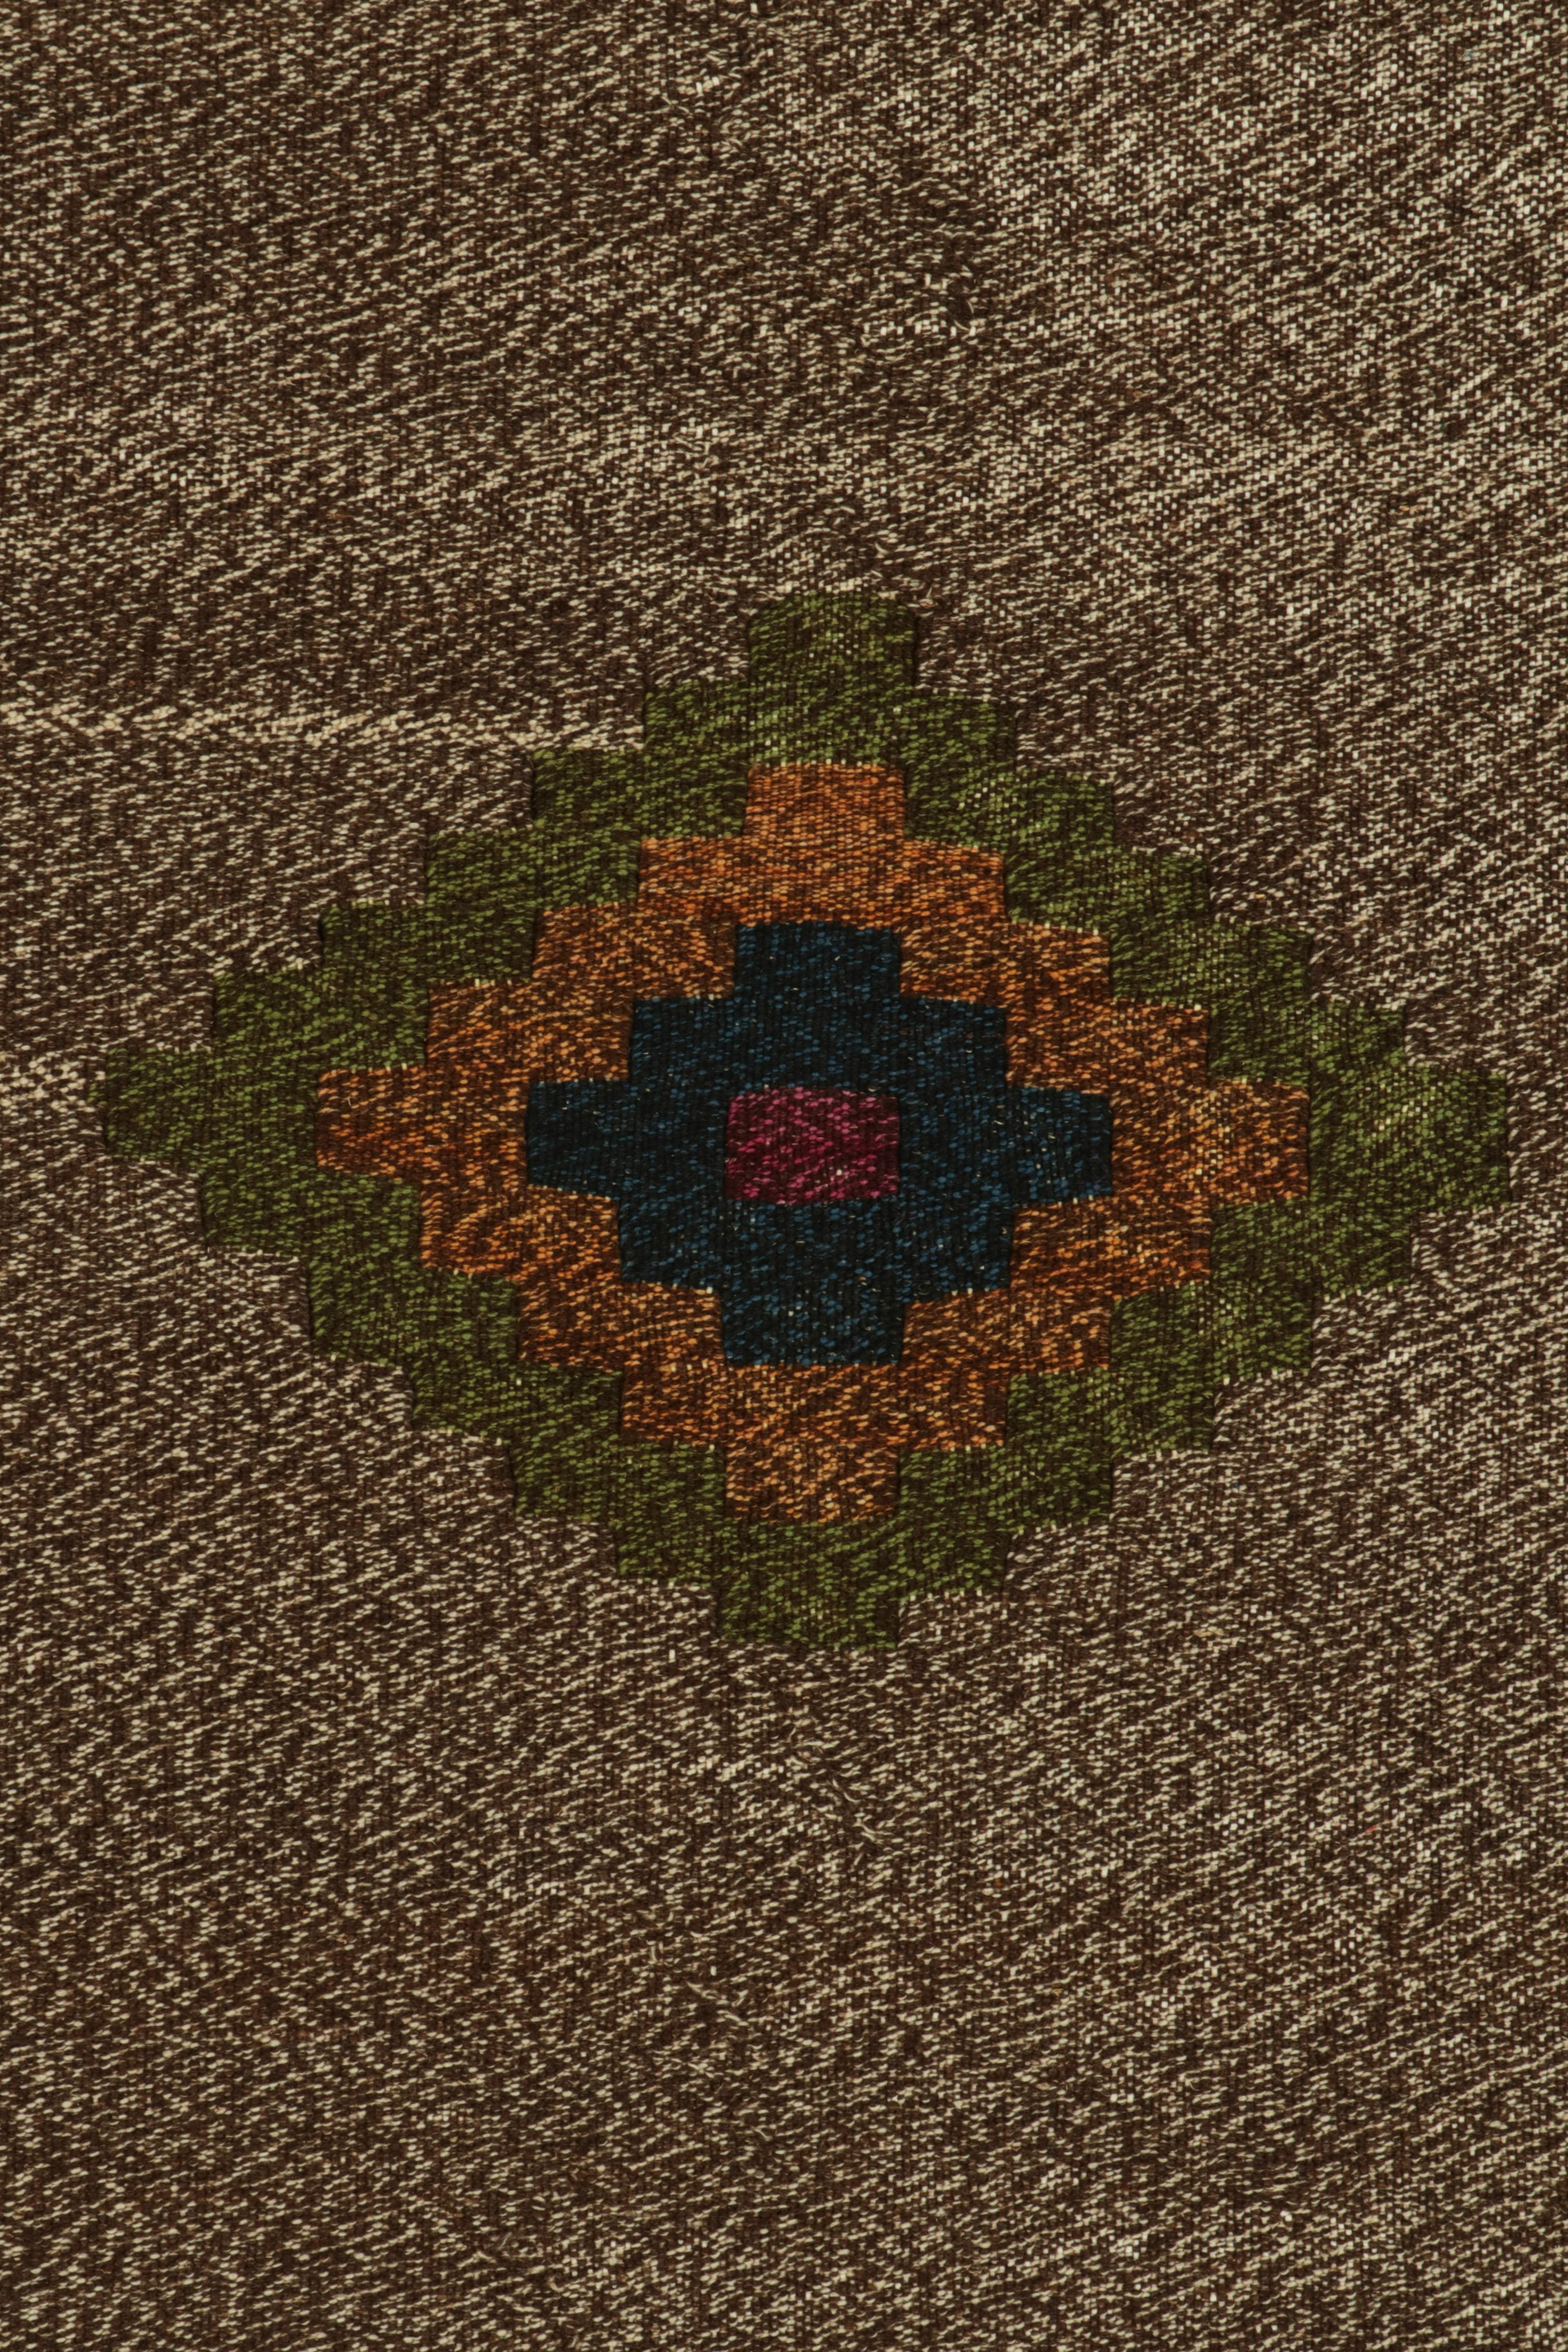 Hand-Knotted 1980s Vintage Sofreh Kilim Rug in Beige-Brown Medallion Pattern by Rug & Kilim For Sale